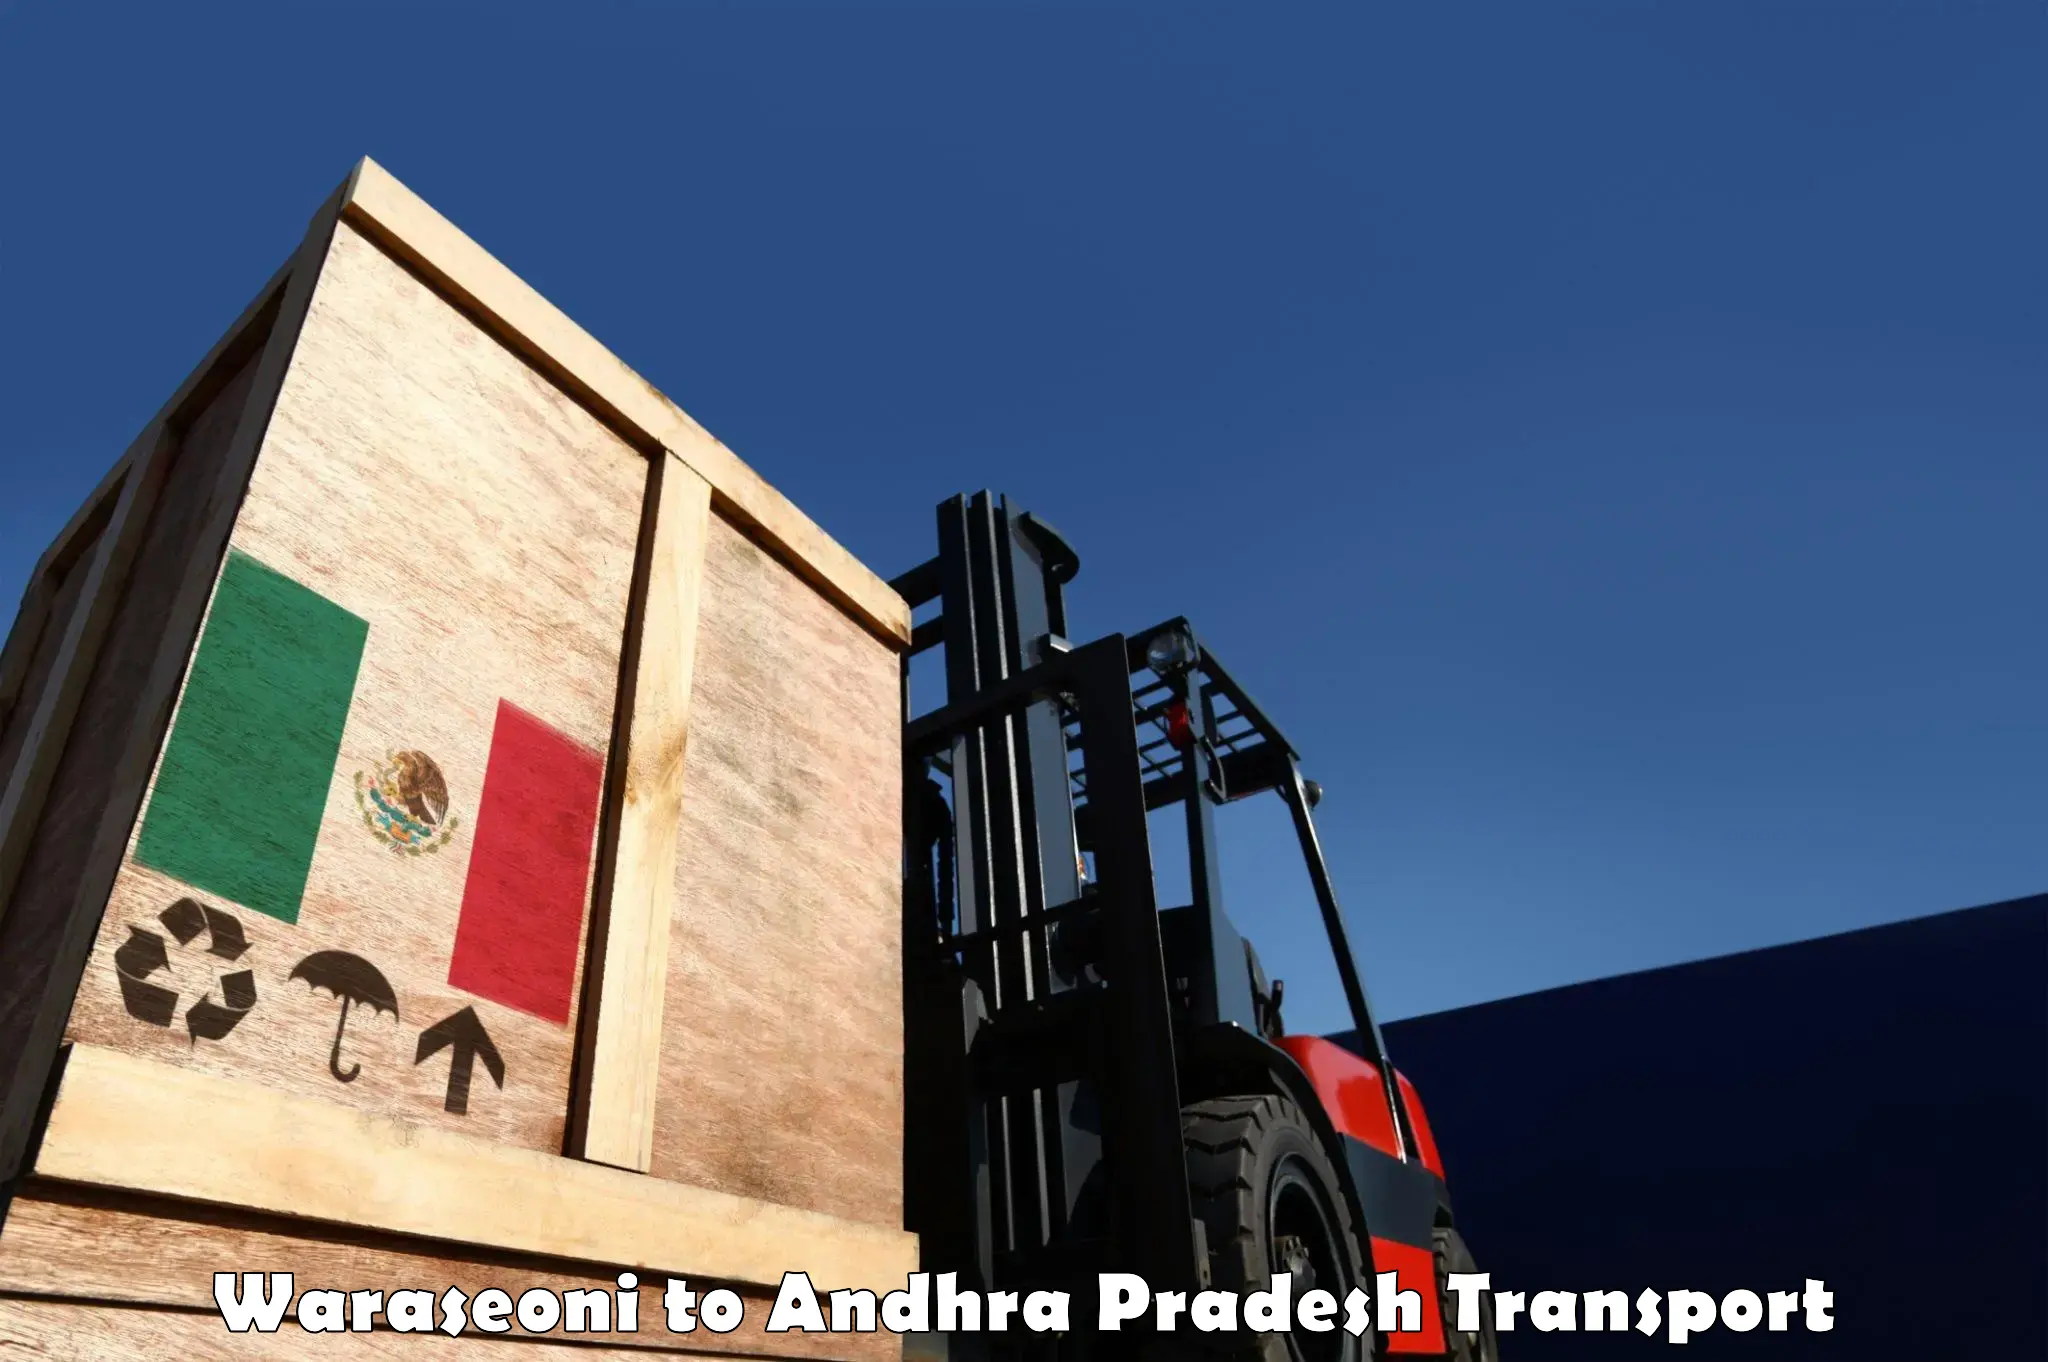 Truck transport companies in India in Waraseoni to Amarapuram